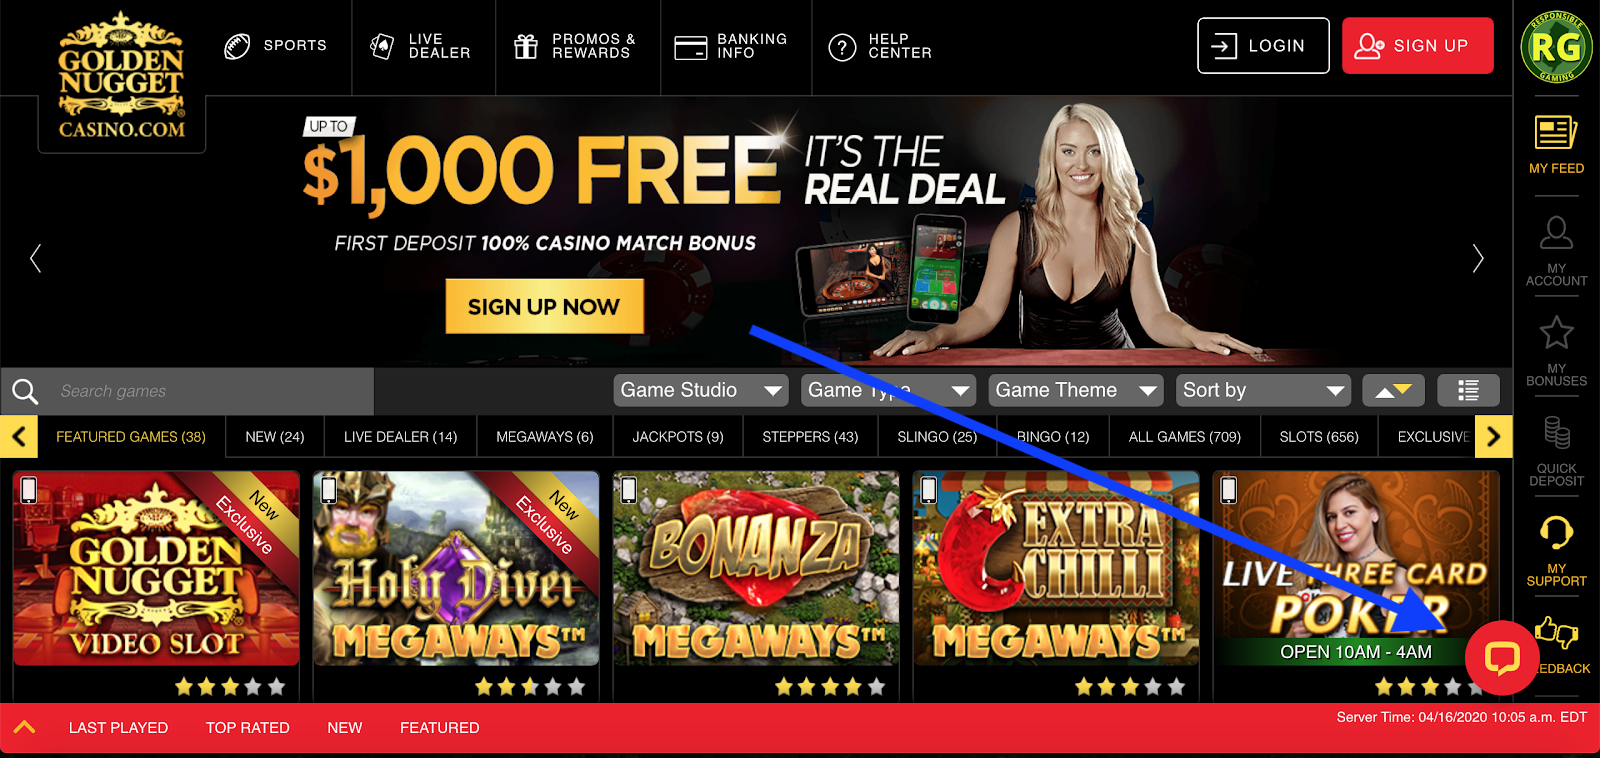 golden nugget online casino customer service